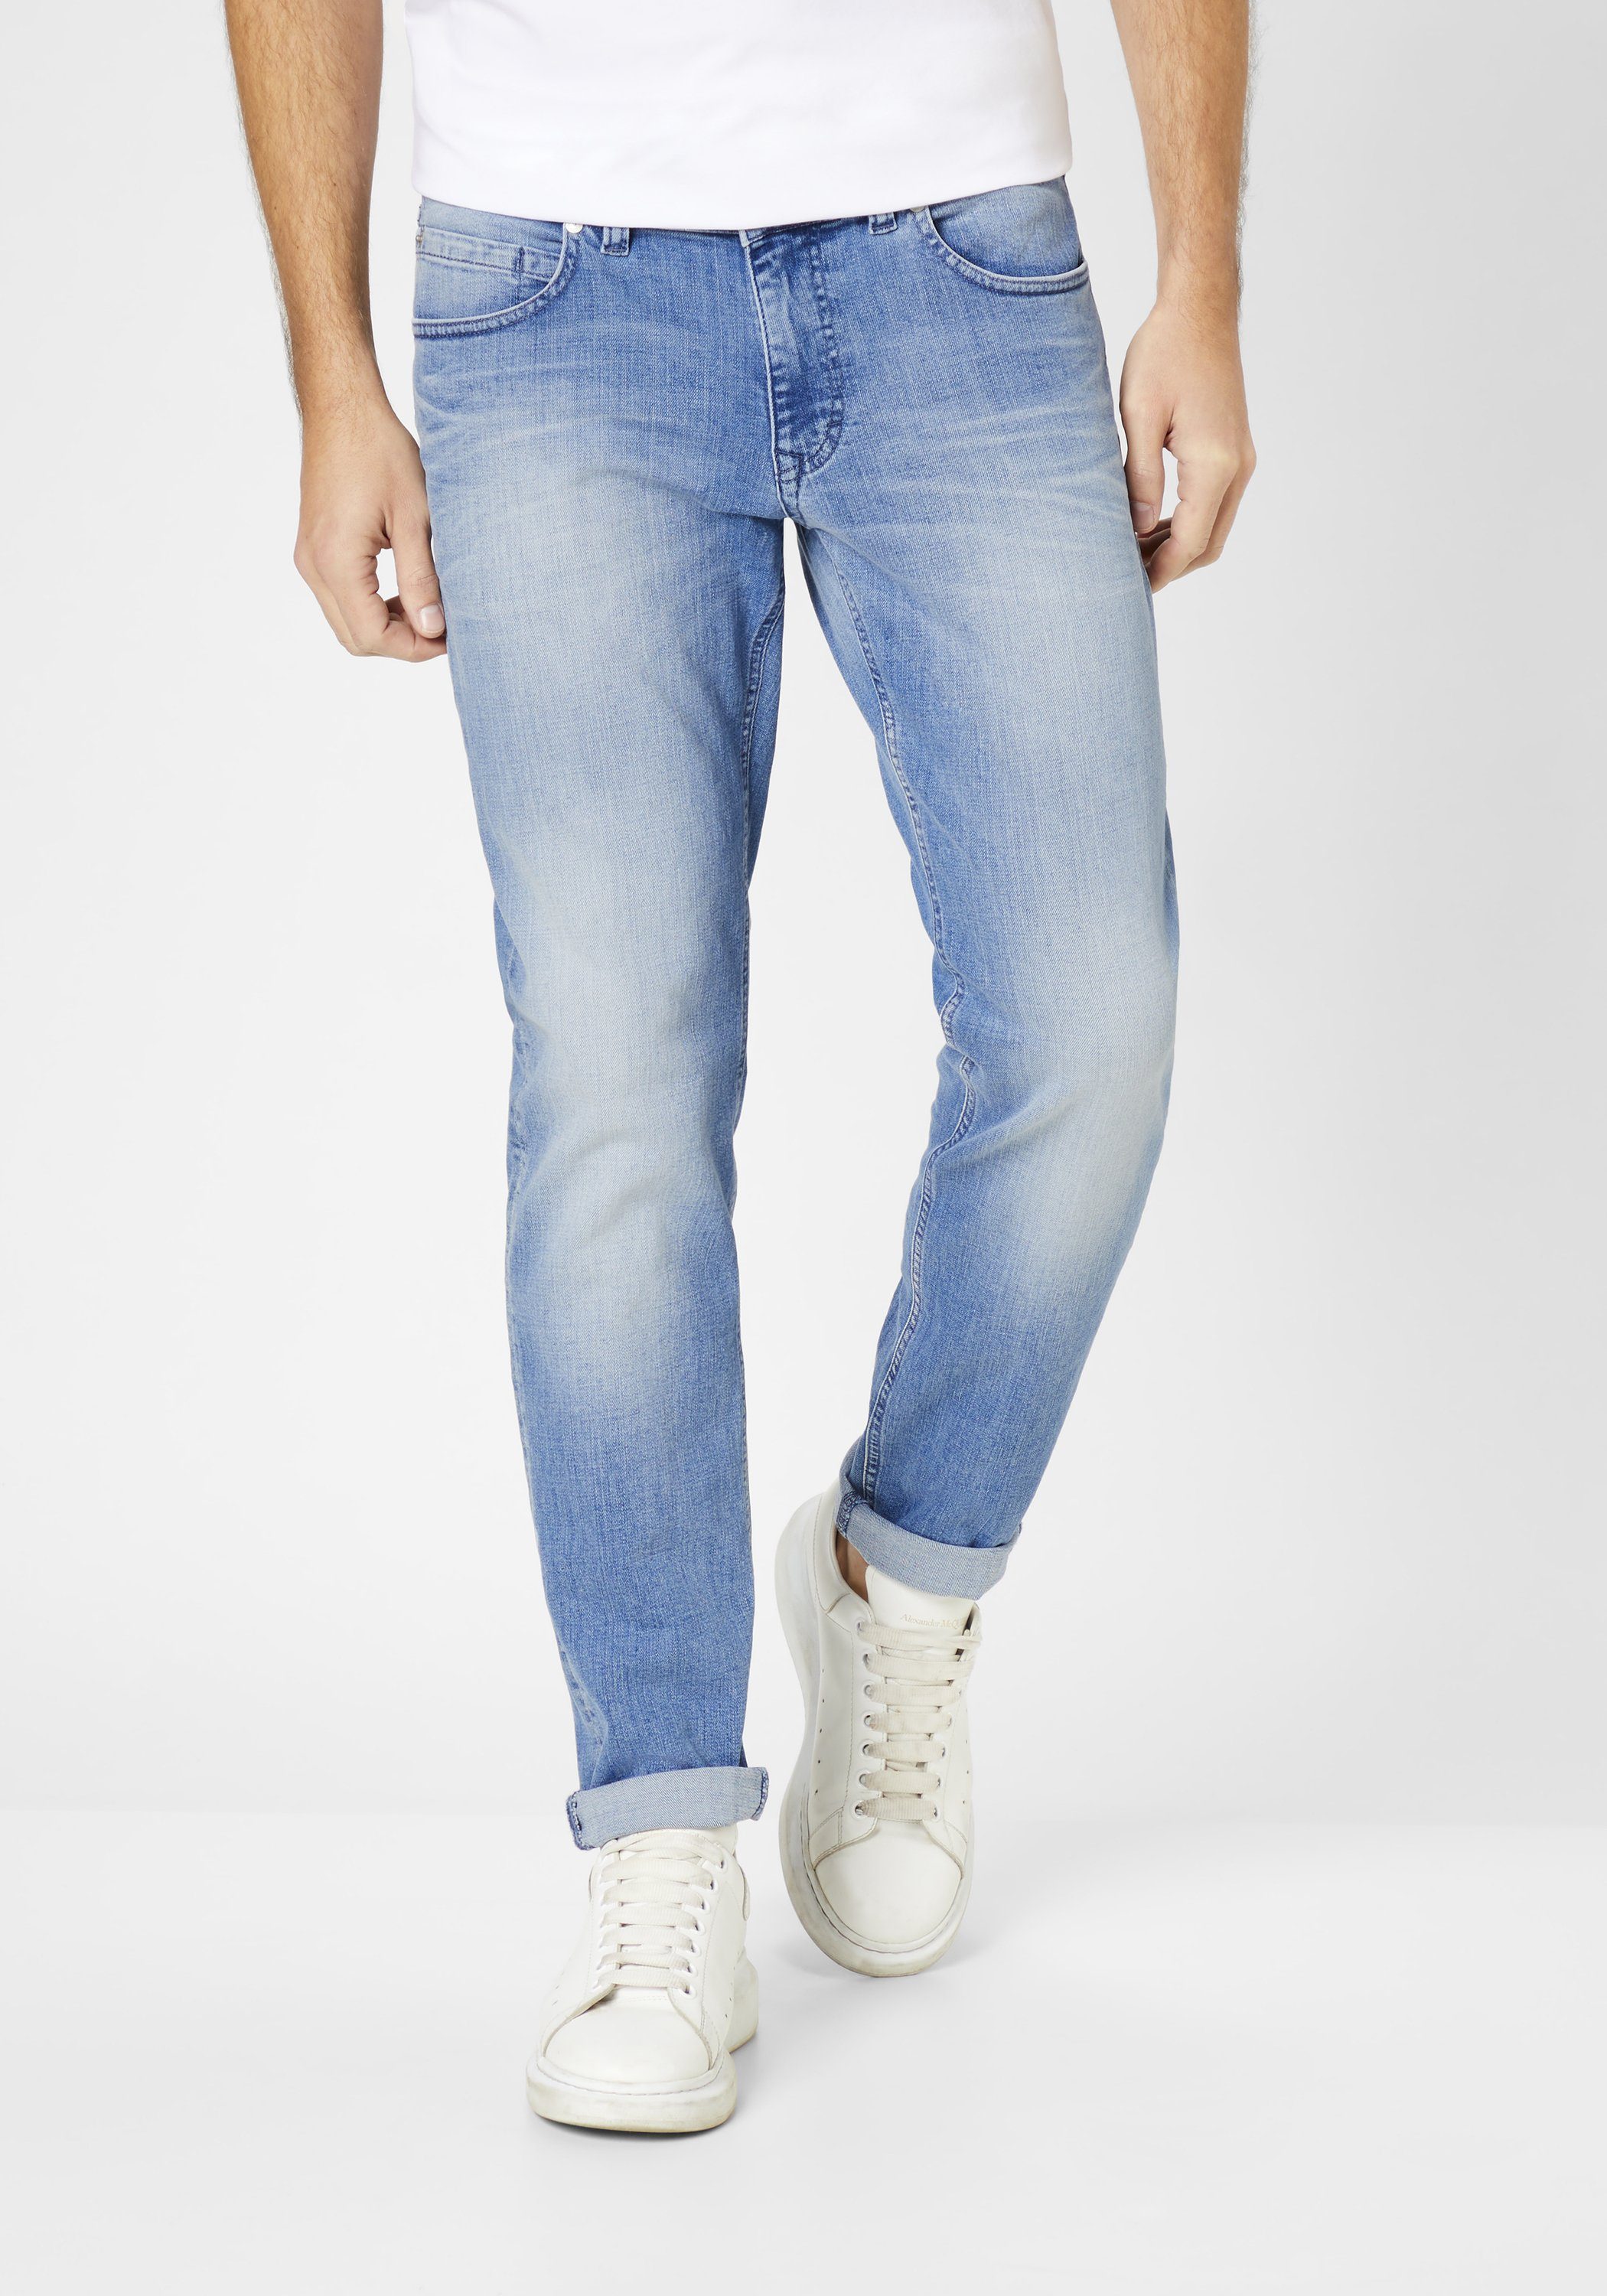 DEAN Stretch Paddock's Jeanshose Slim-fit-Jeans mit